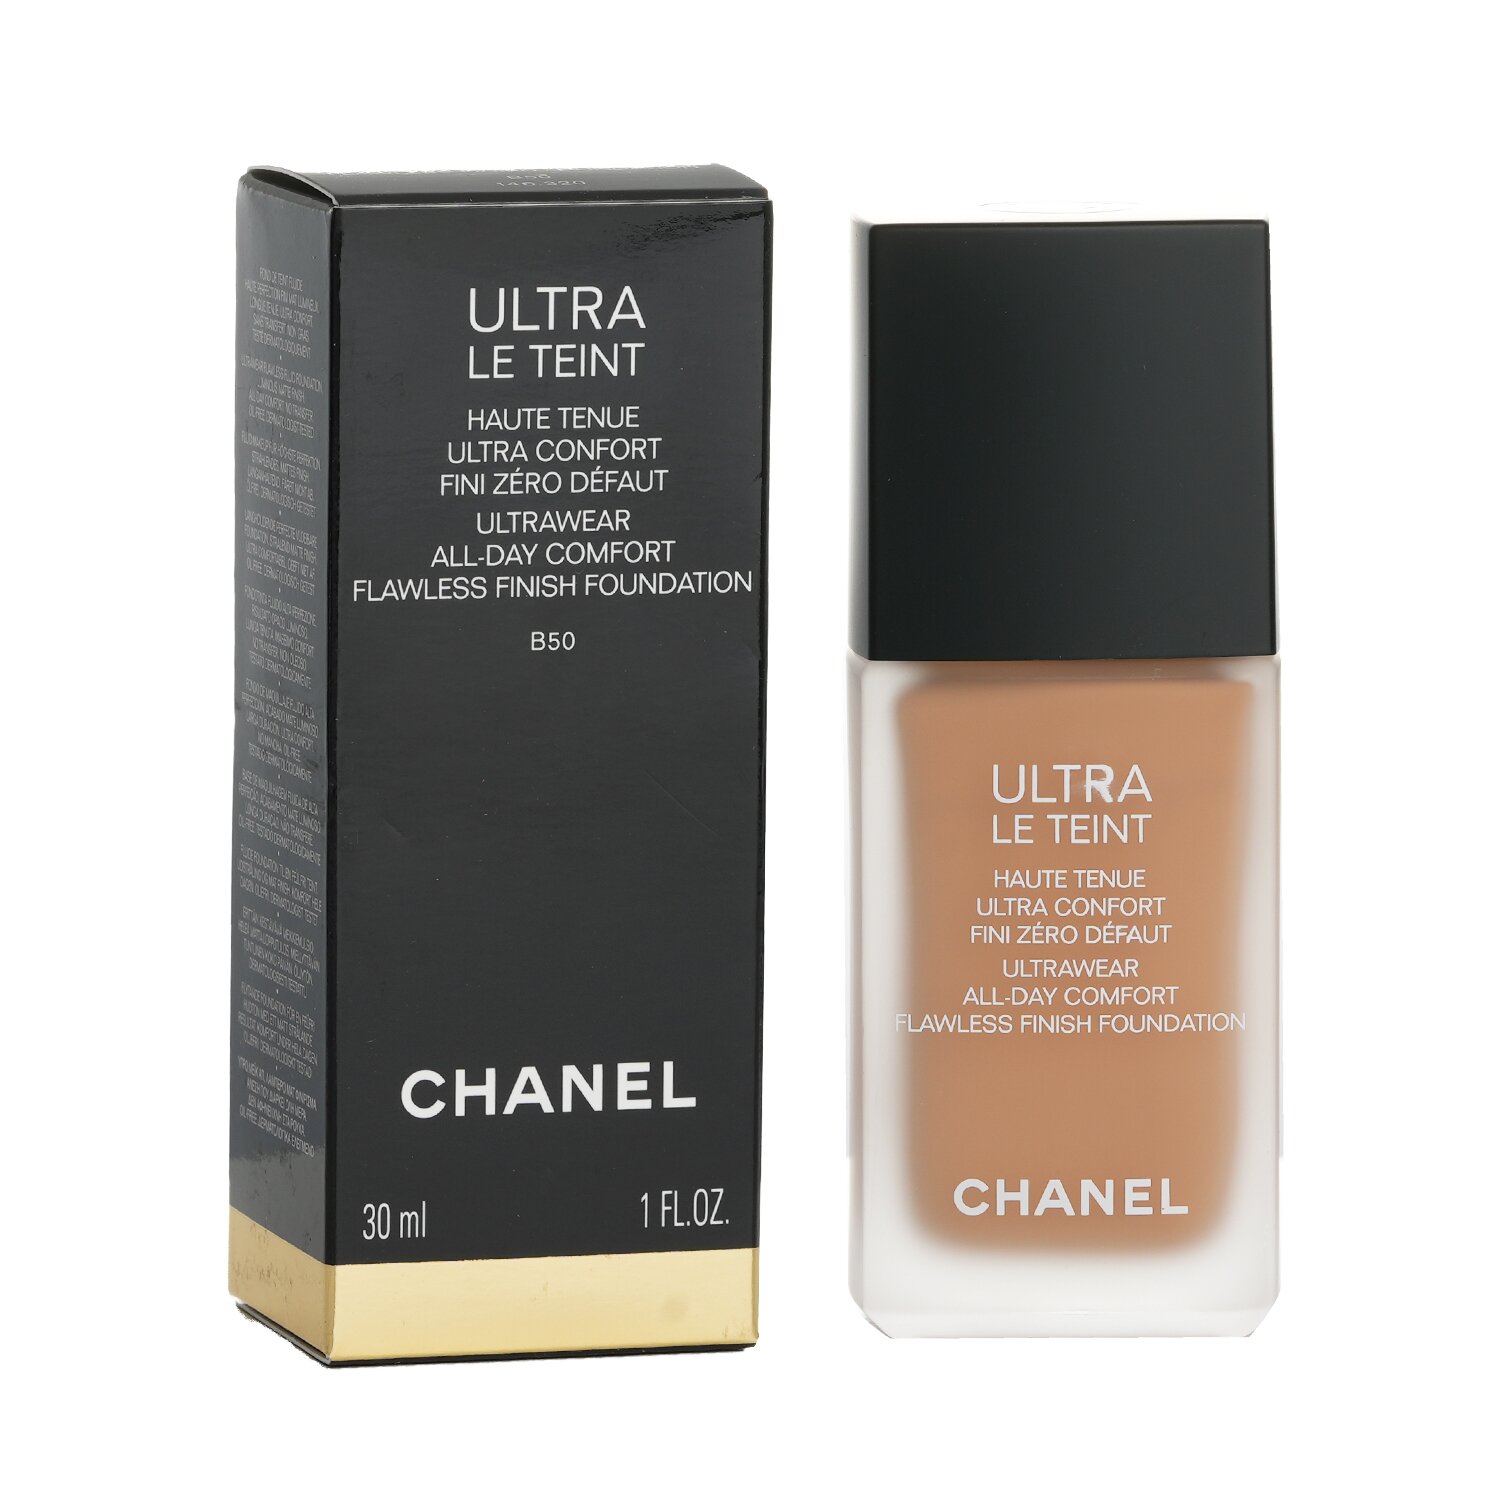 Chanel Ultra Le Teint Ultrawear All Day Comfort Flawless Finish Foundation B50